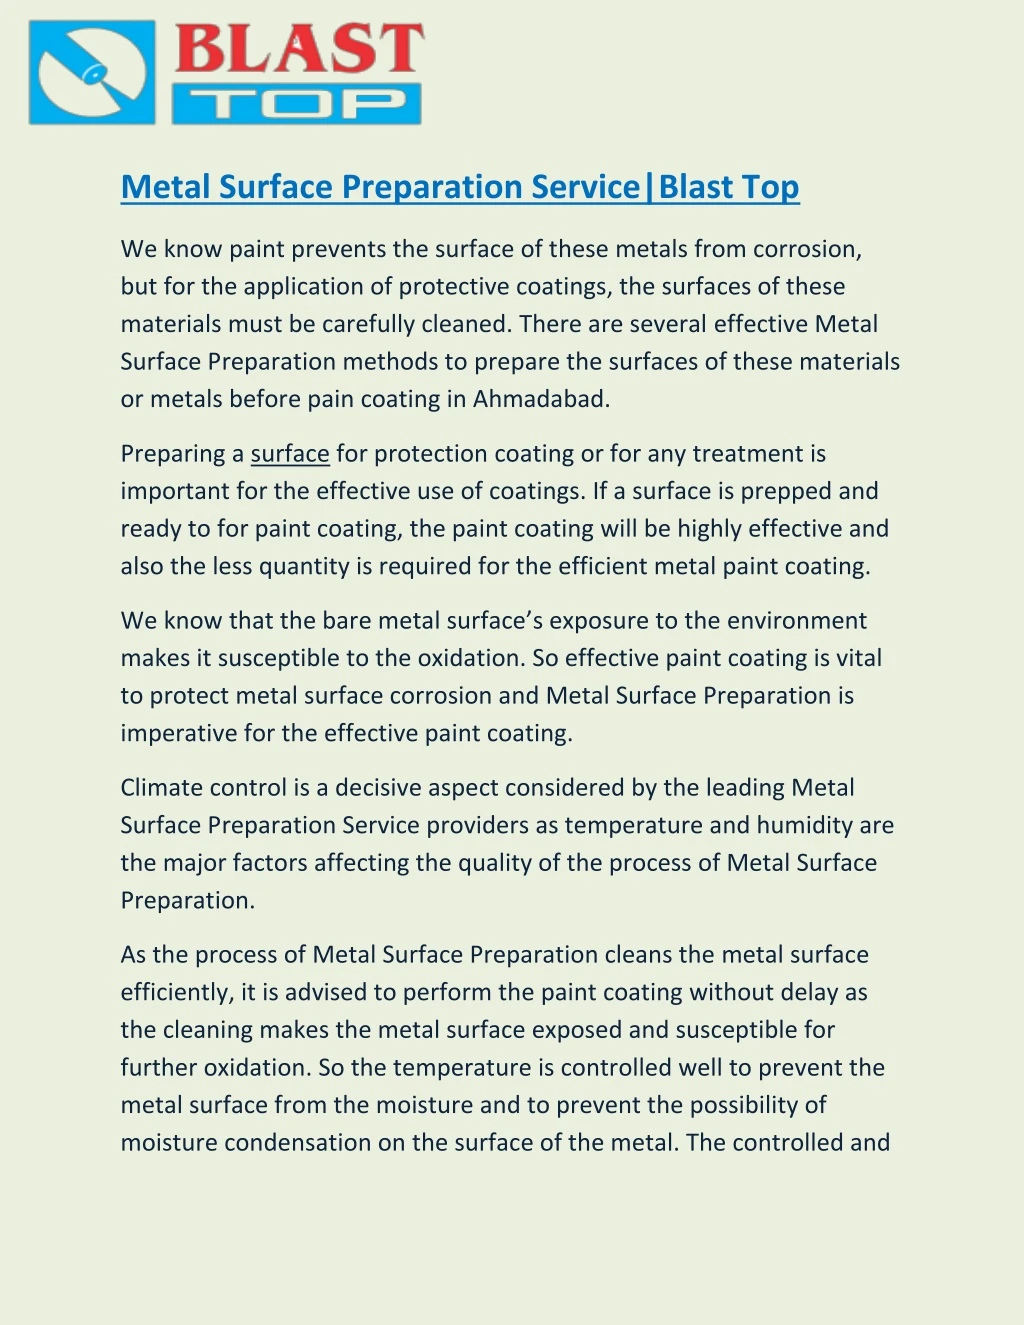 metal surface preparation service blast top